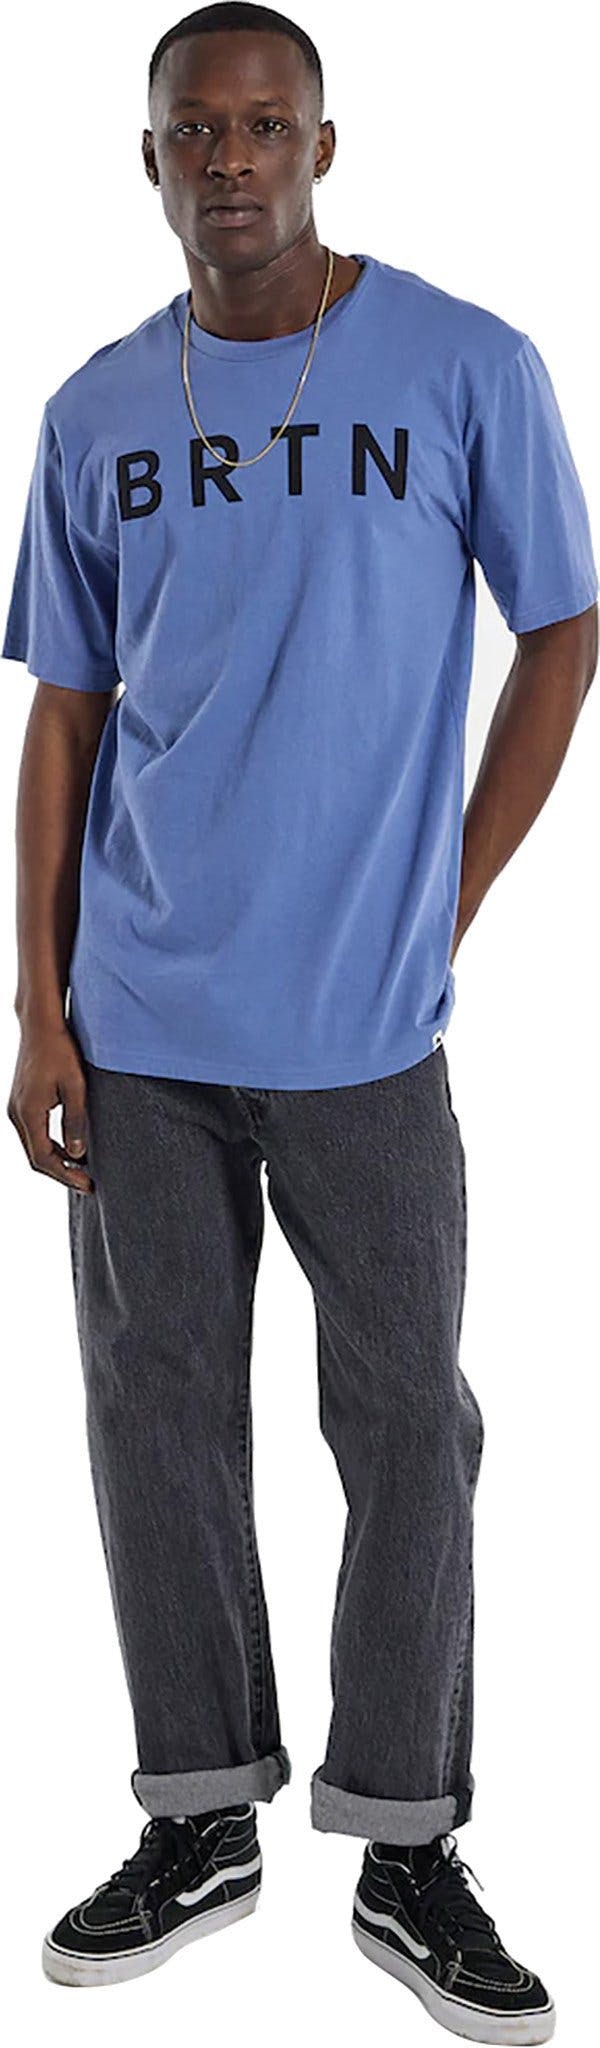 Product image for BRTN Short Sleeve T-Shirt - Mens